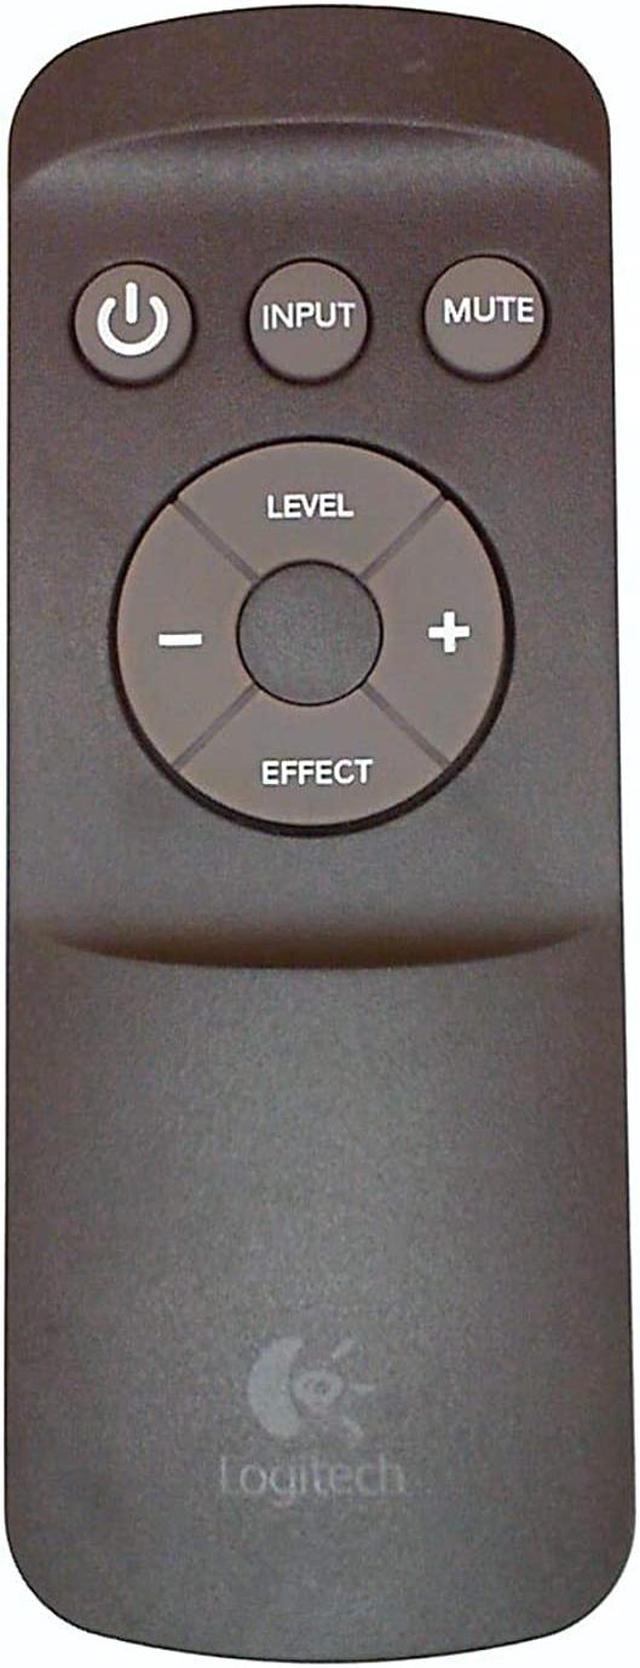 kalorie Varme alien Logitech Remote Control for Speaker System Z906 Universal Remotes -  Newegg.com